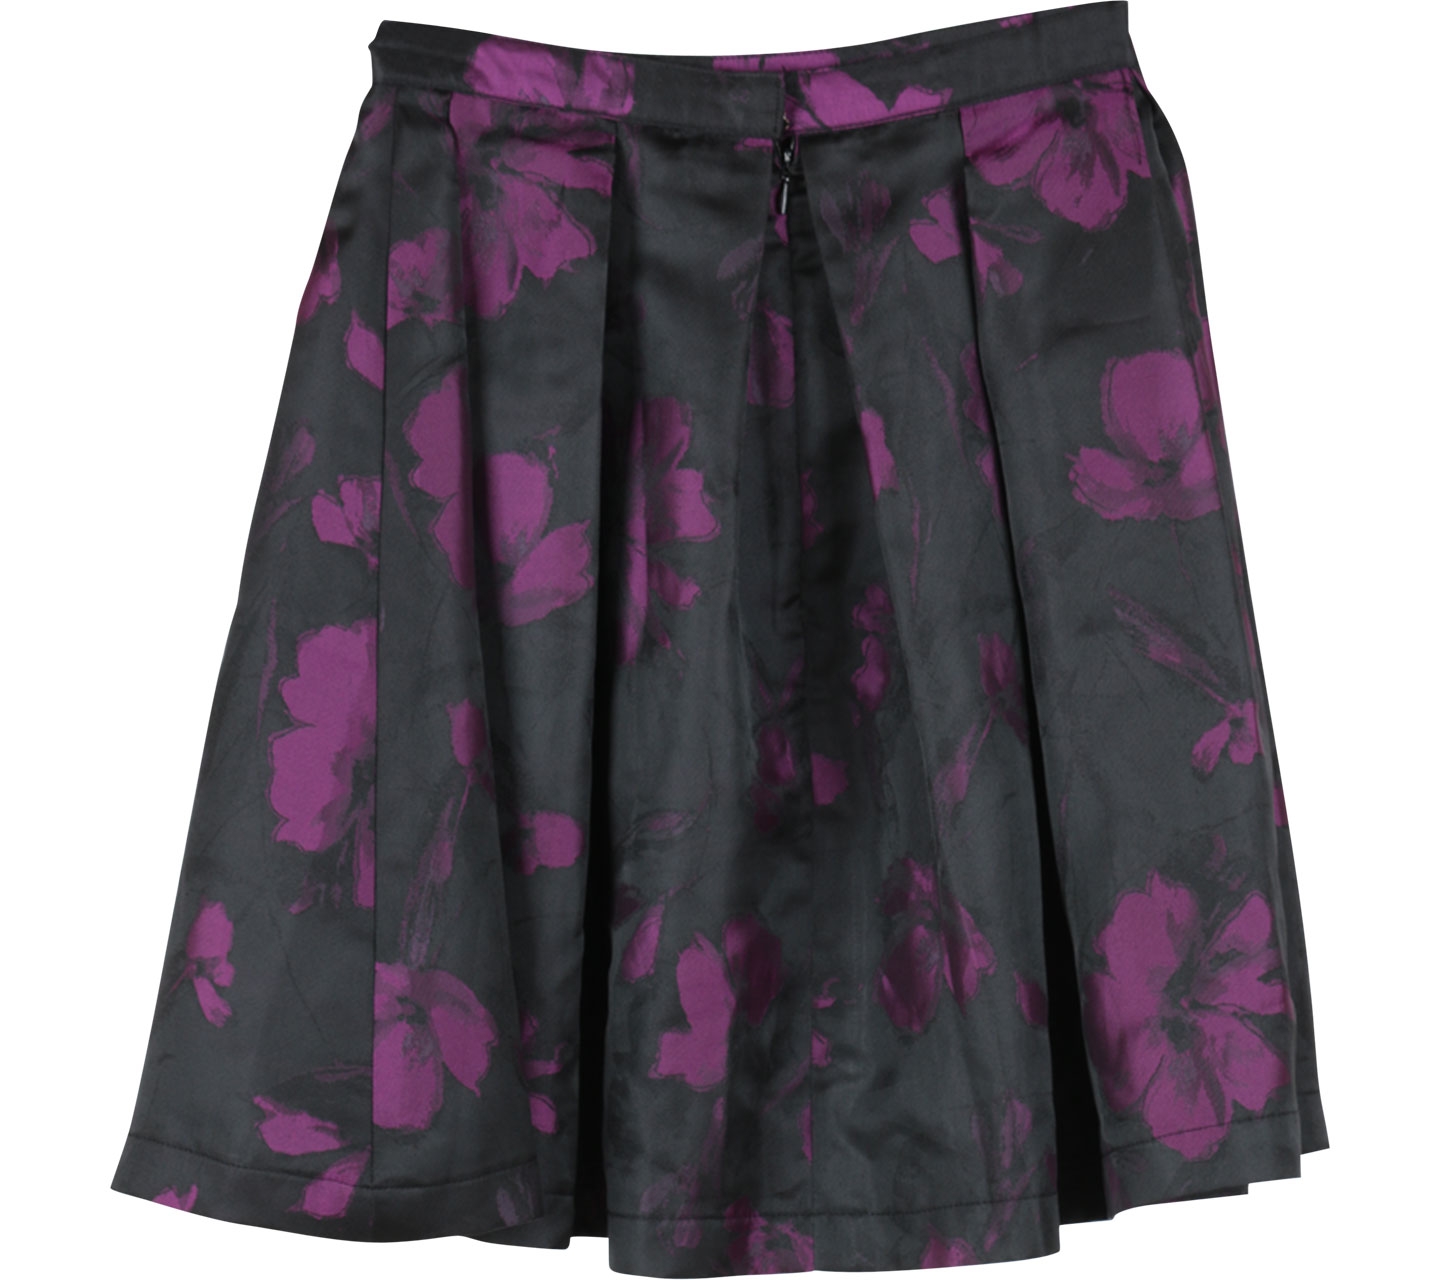 Esme Gallery Black And Purple Floral Skirt